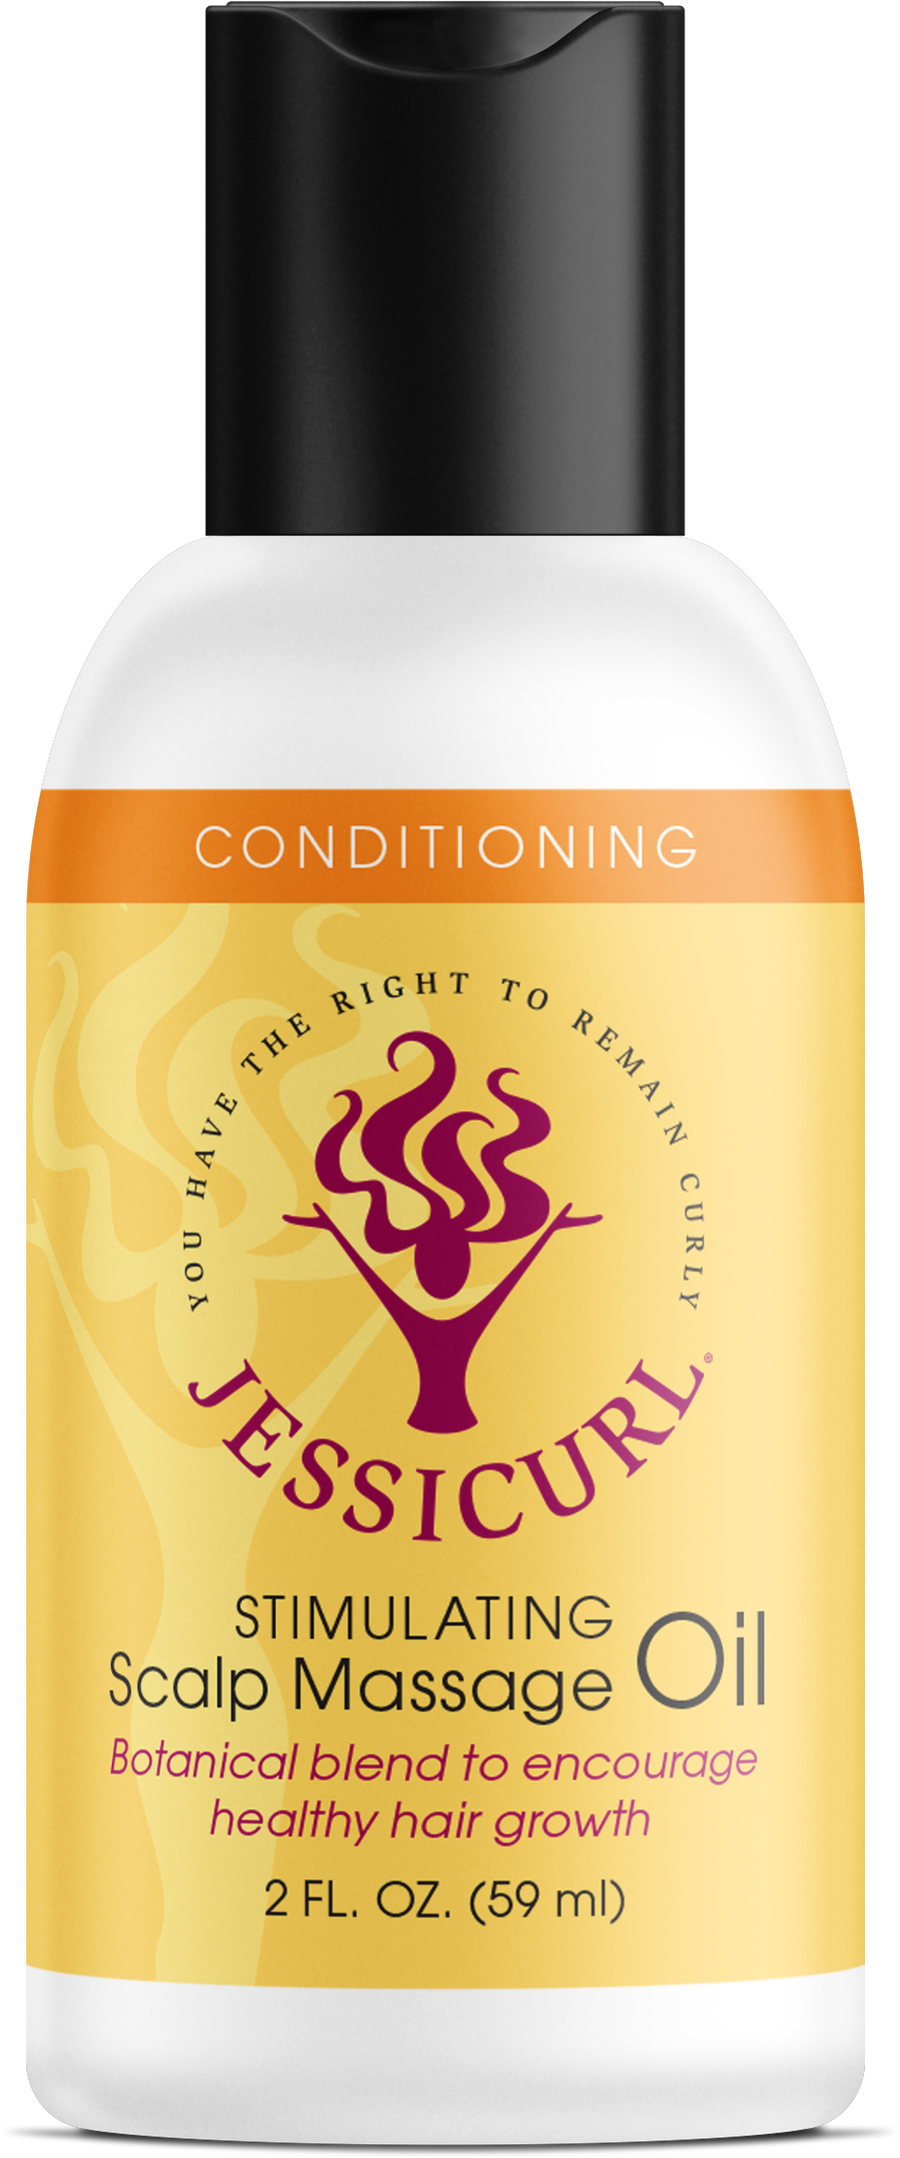 Jessicurl - Stimulating Scalp Massage Oil - 2 oz